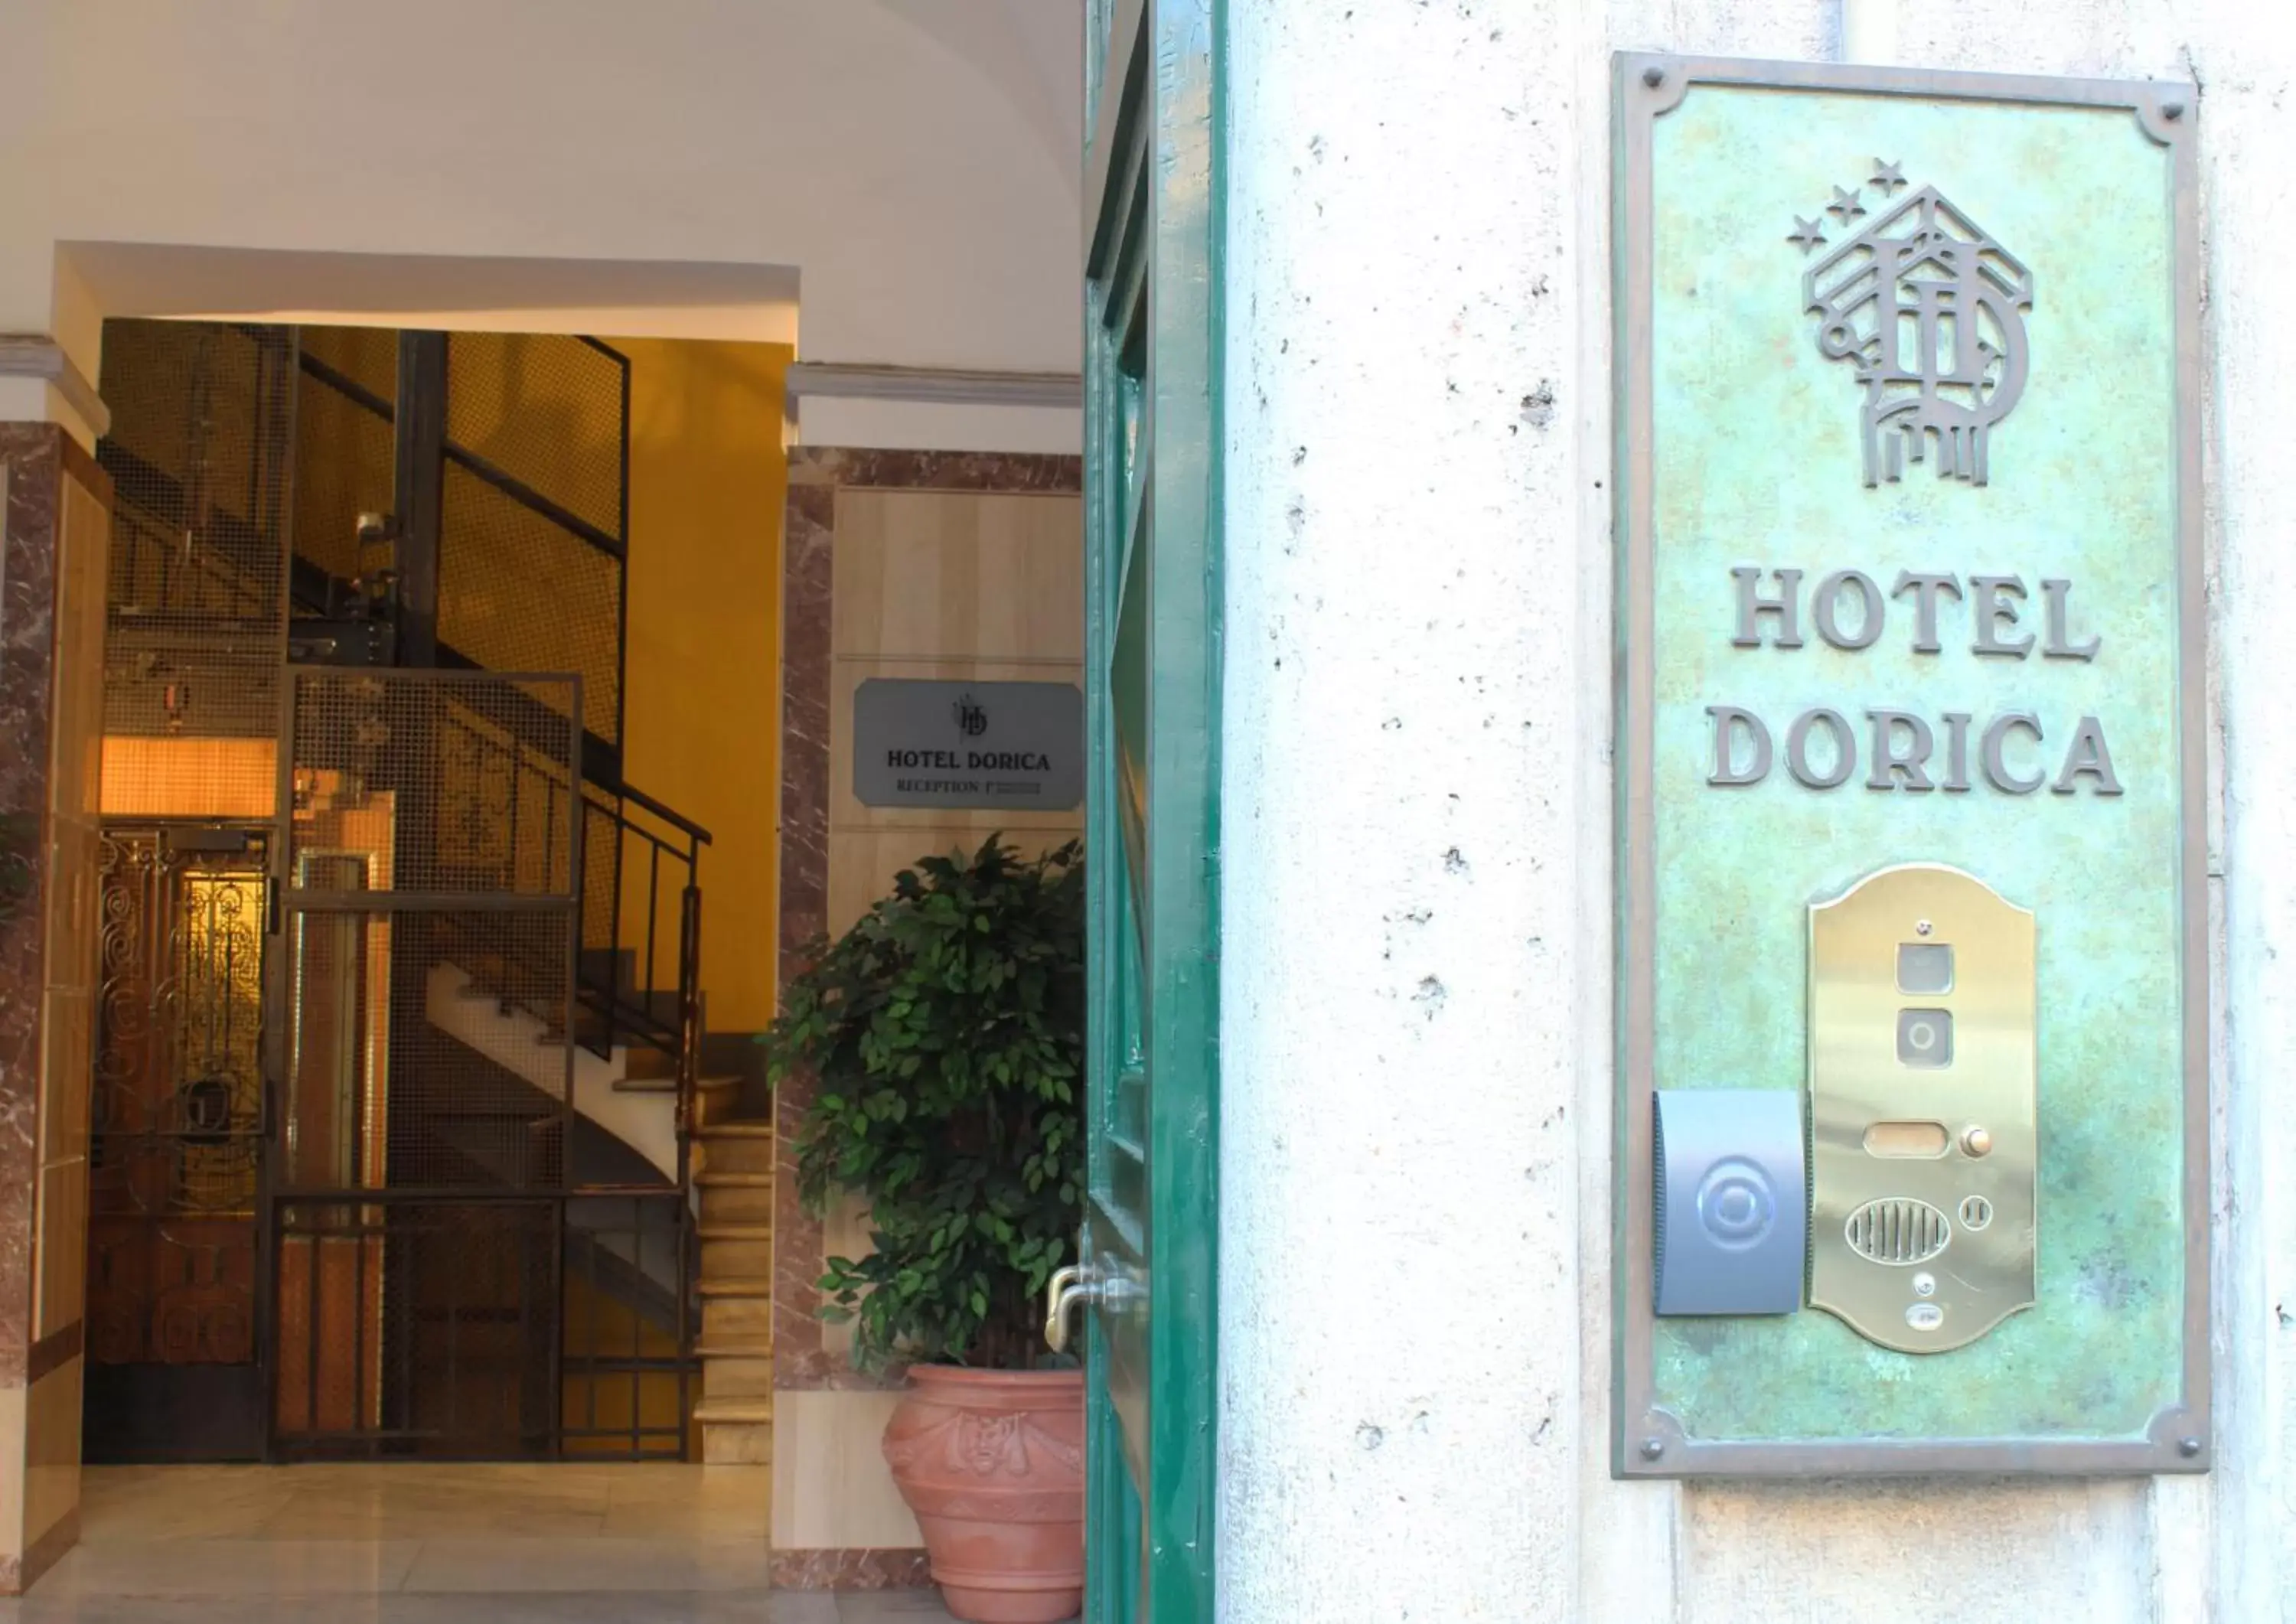 Property logo or sign in Hotel Dorica